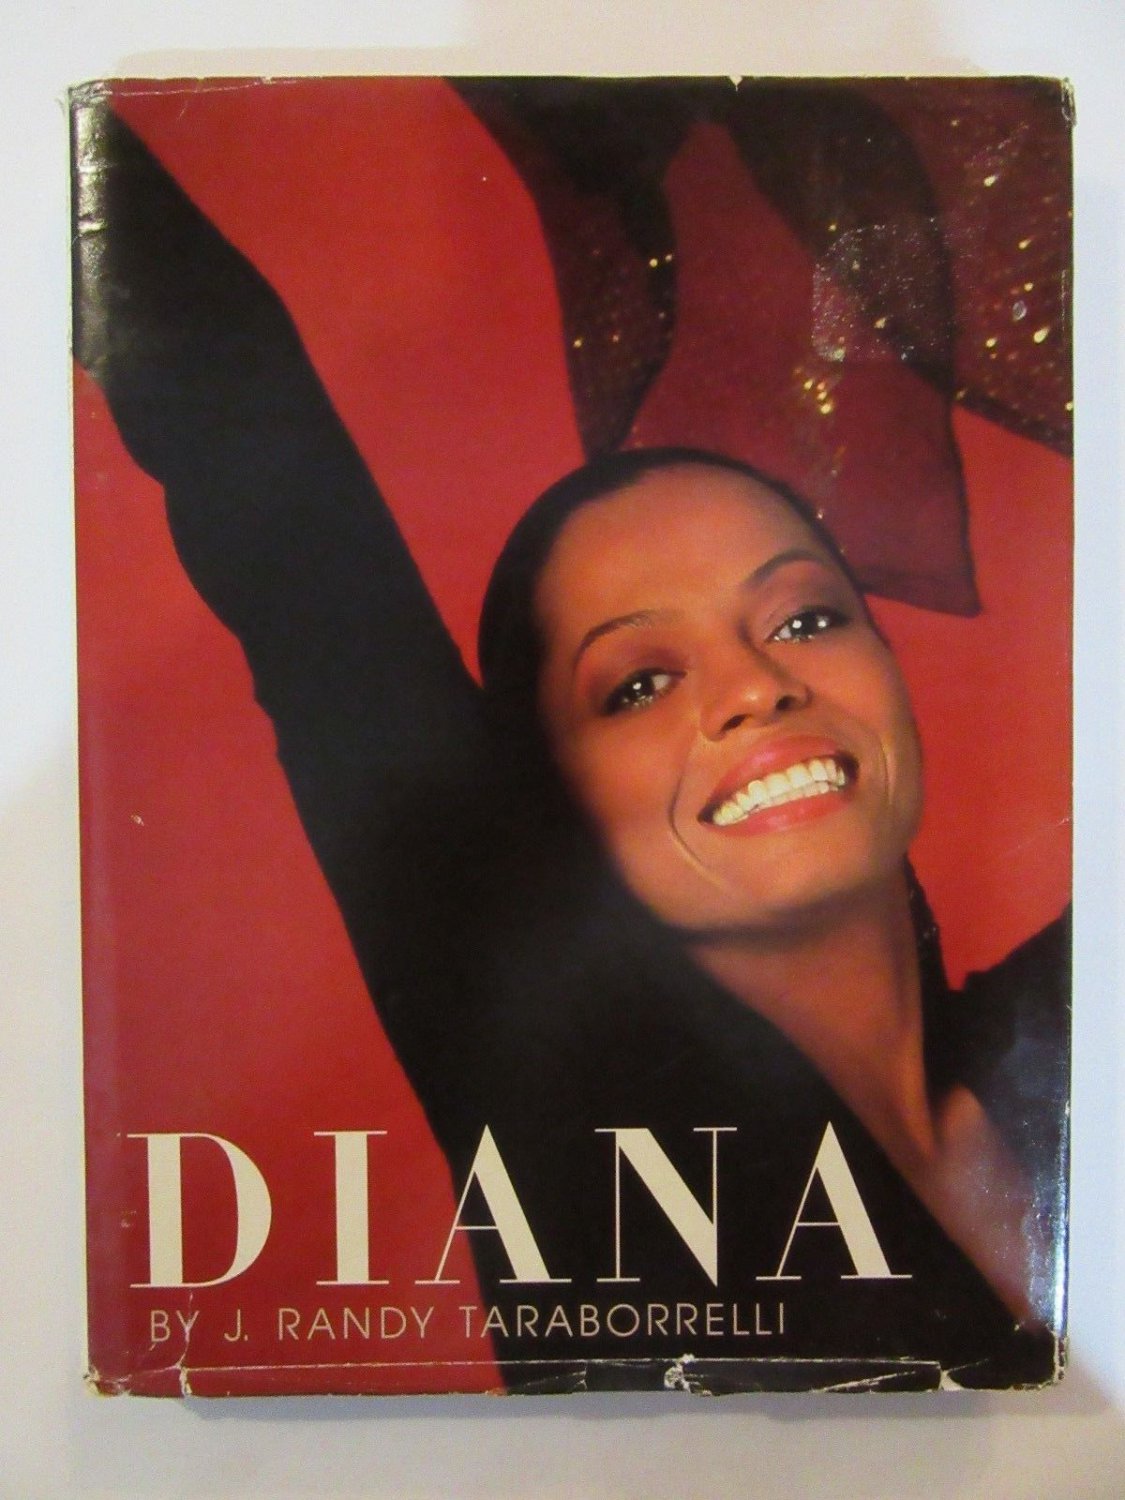 Diana by J Randy Taraborrelli Hardcover - 1st Edition 1985 Illustrated Biography